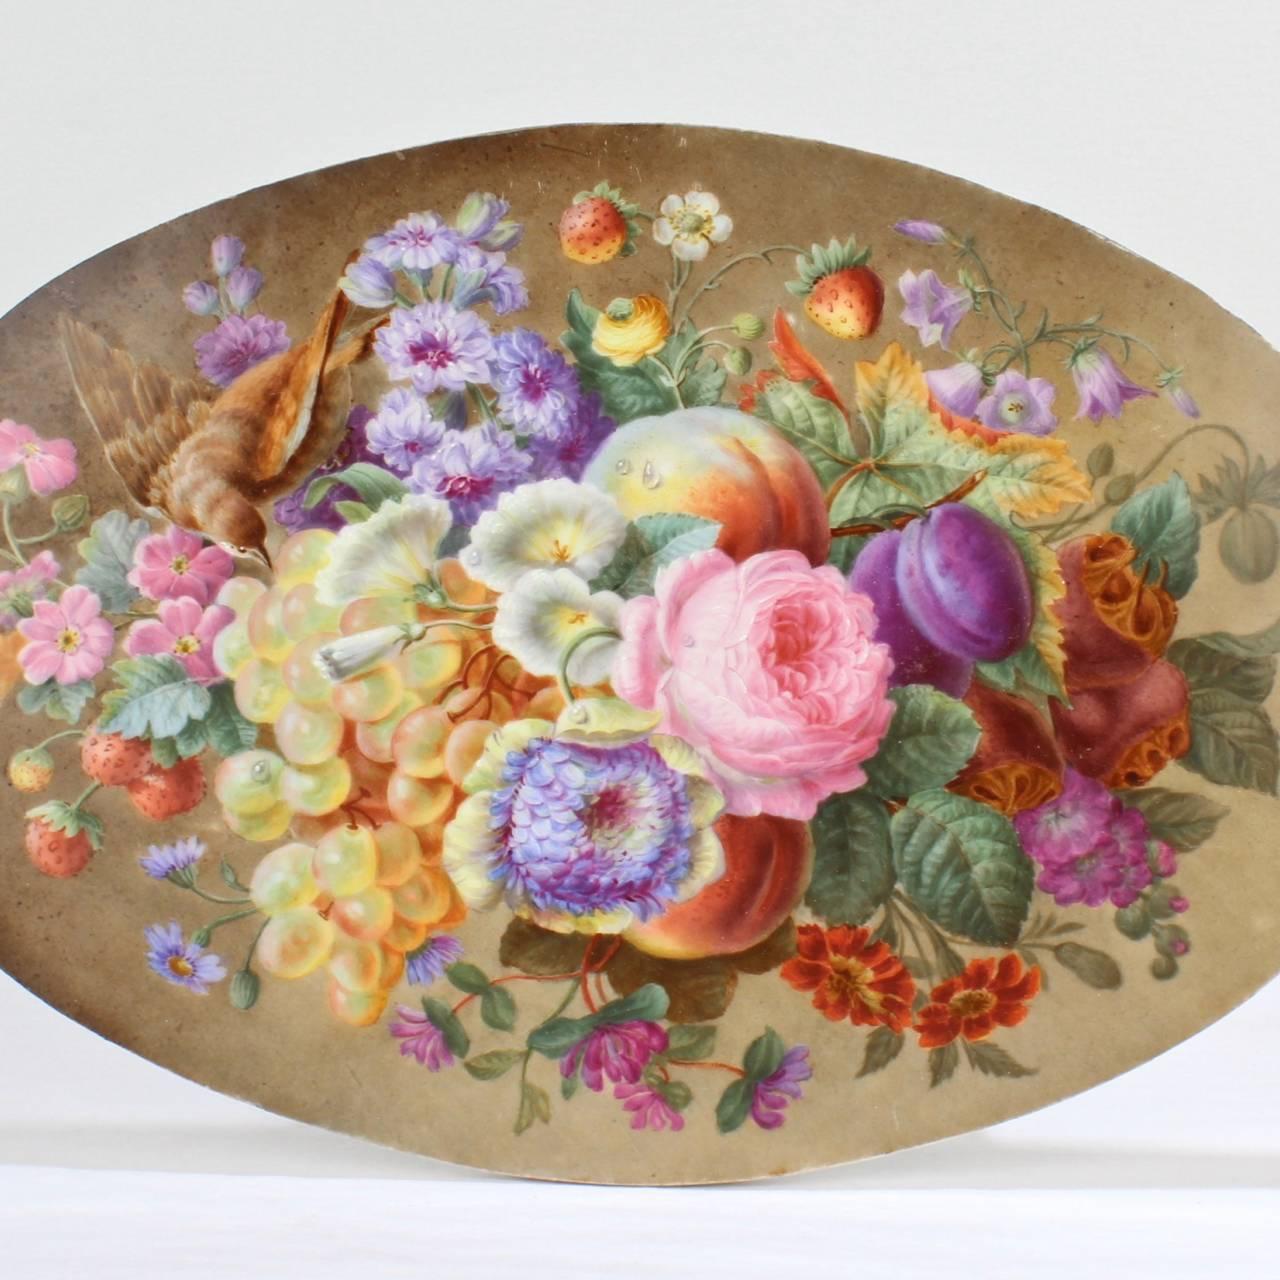 British Large Antique English Porcelain Plaque of Fruit, Flowers & a Bird, 19th Century